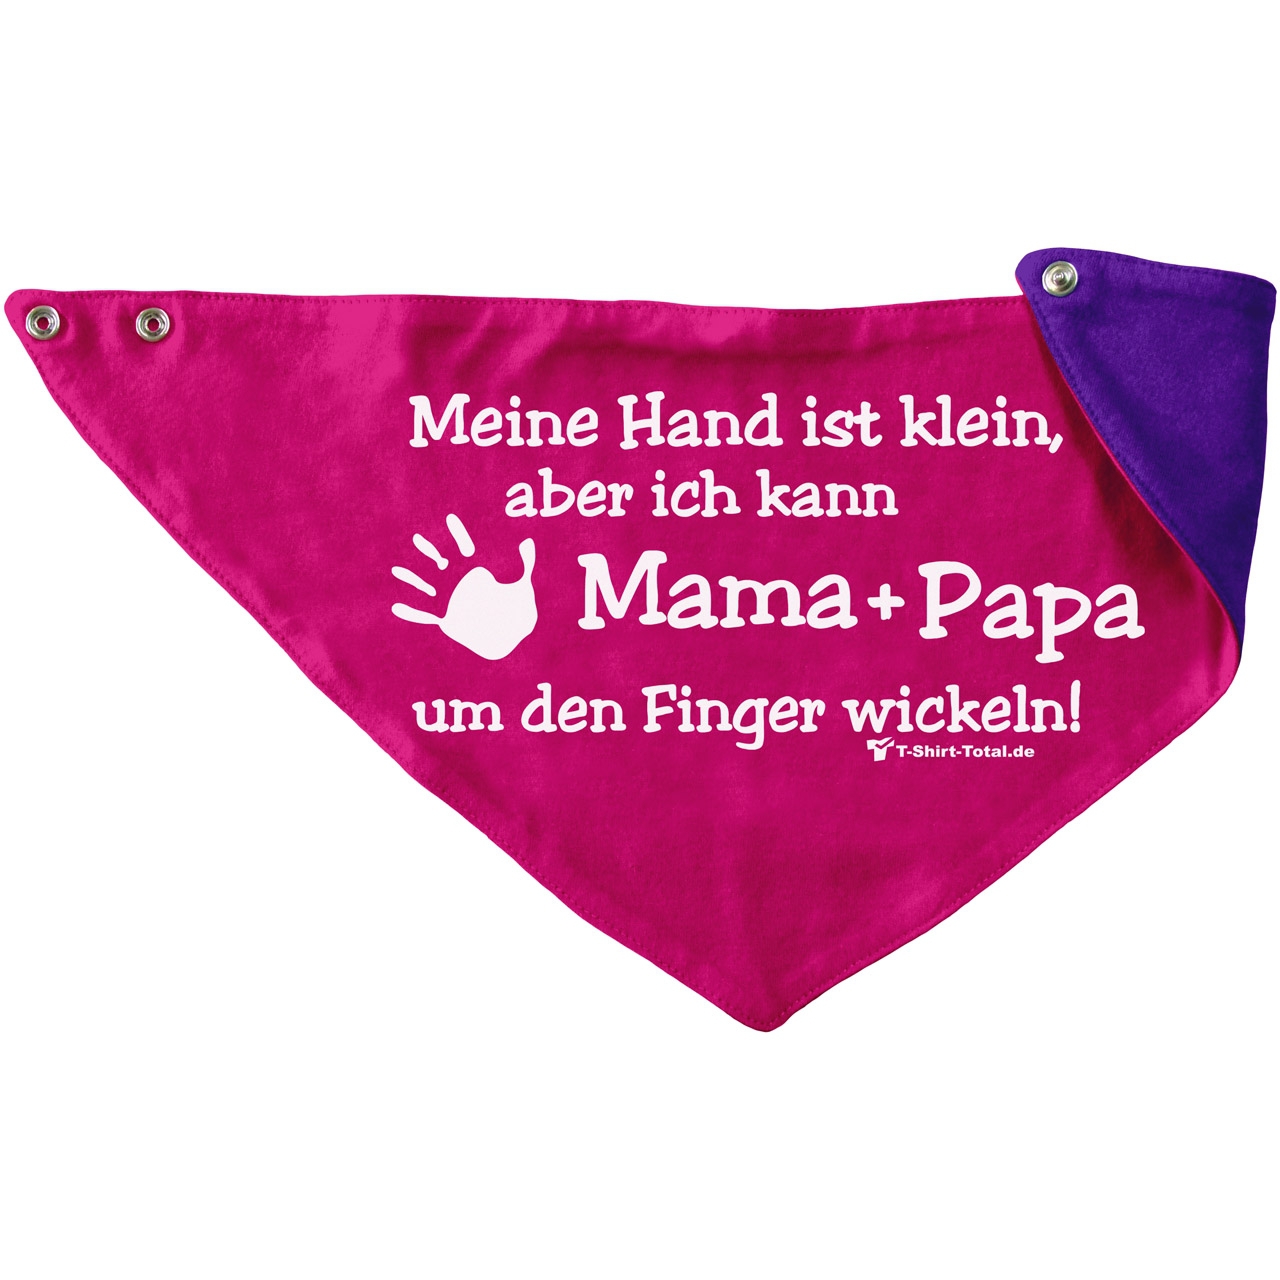 Kleine Hand Mama Papa Kinder Dreieckstuch pink/lila